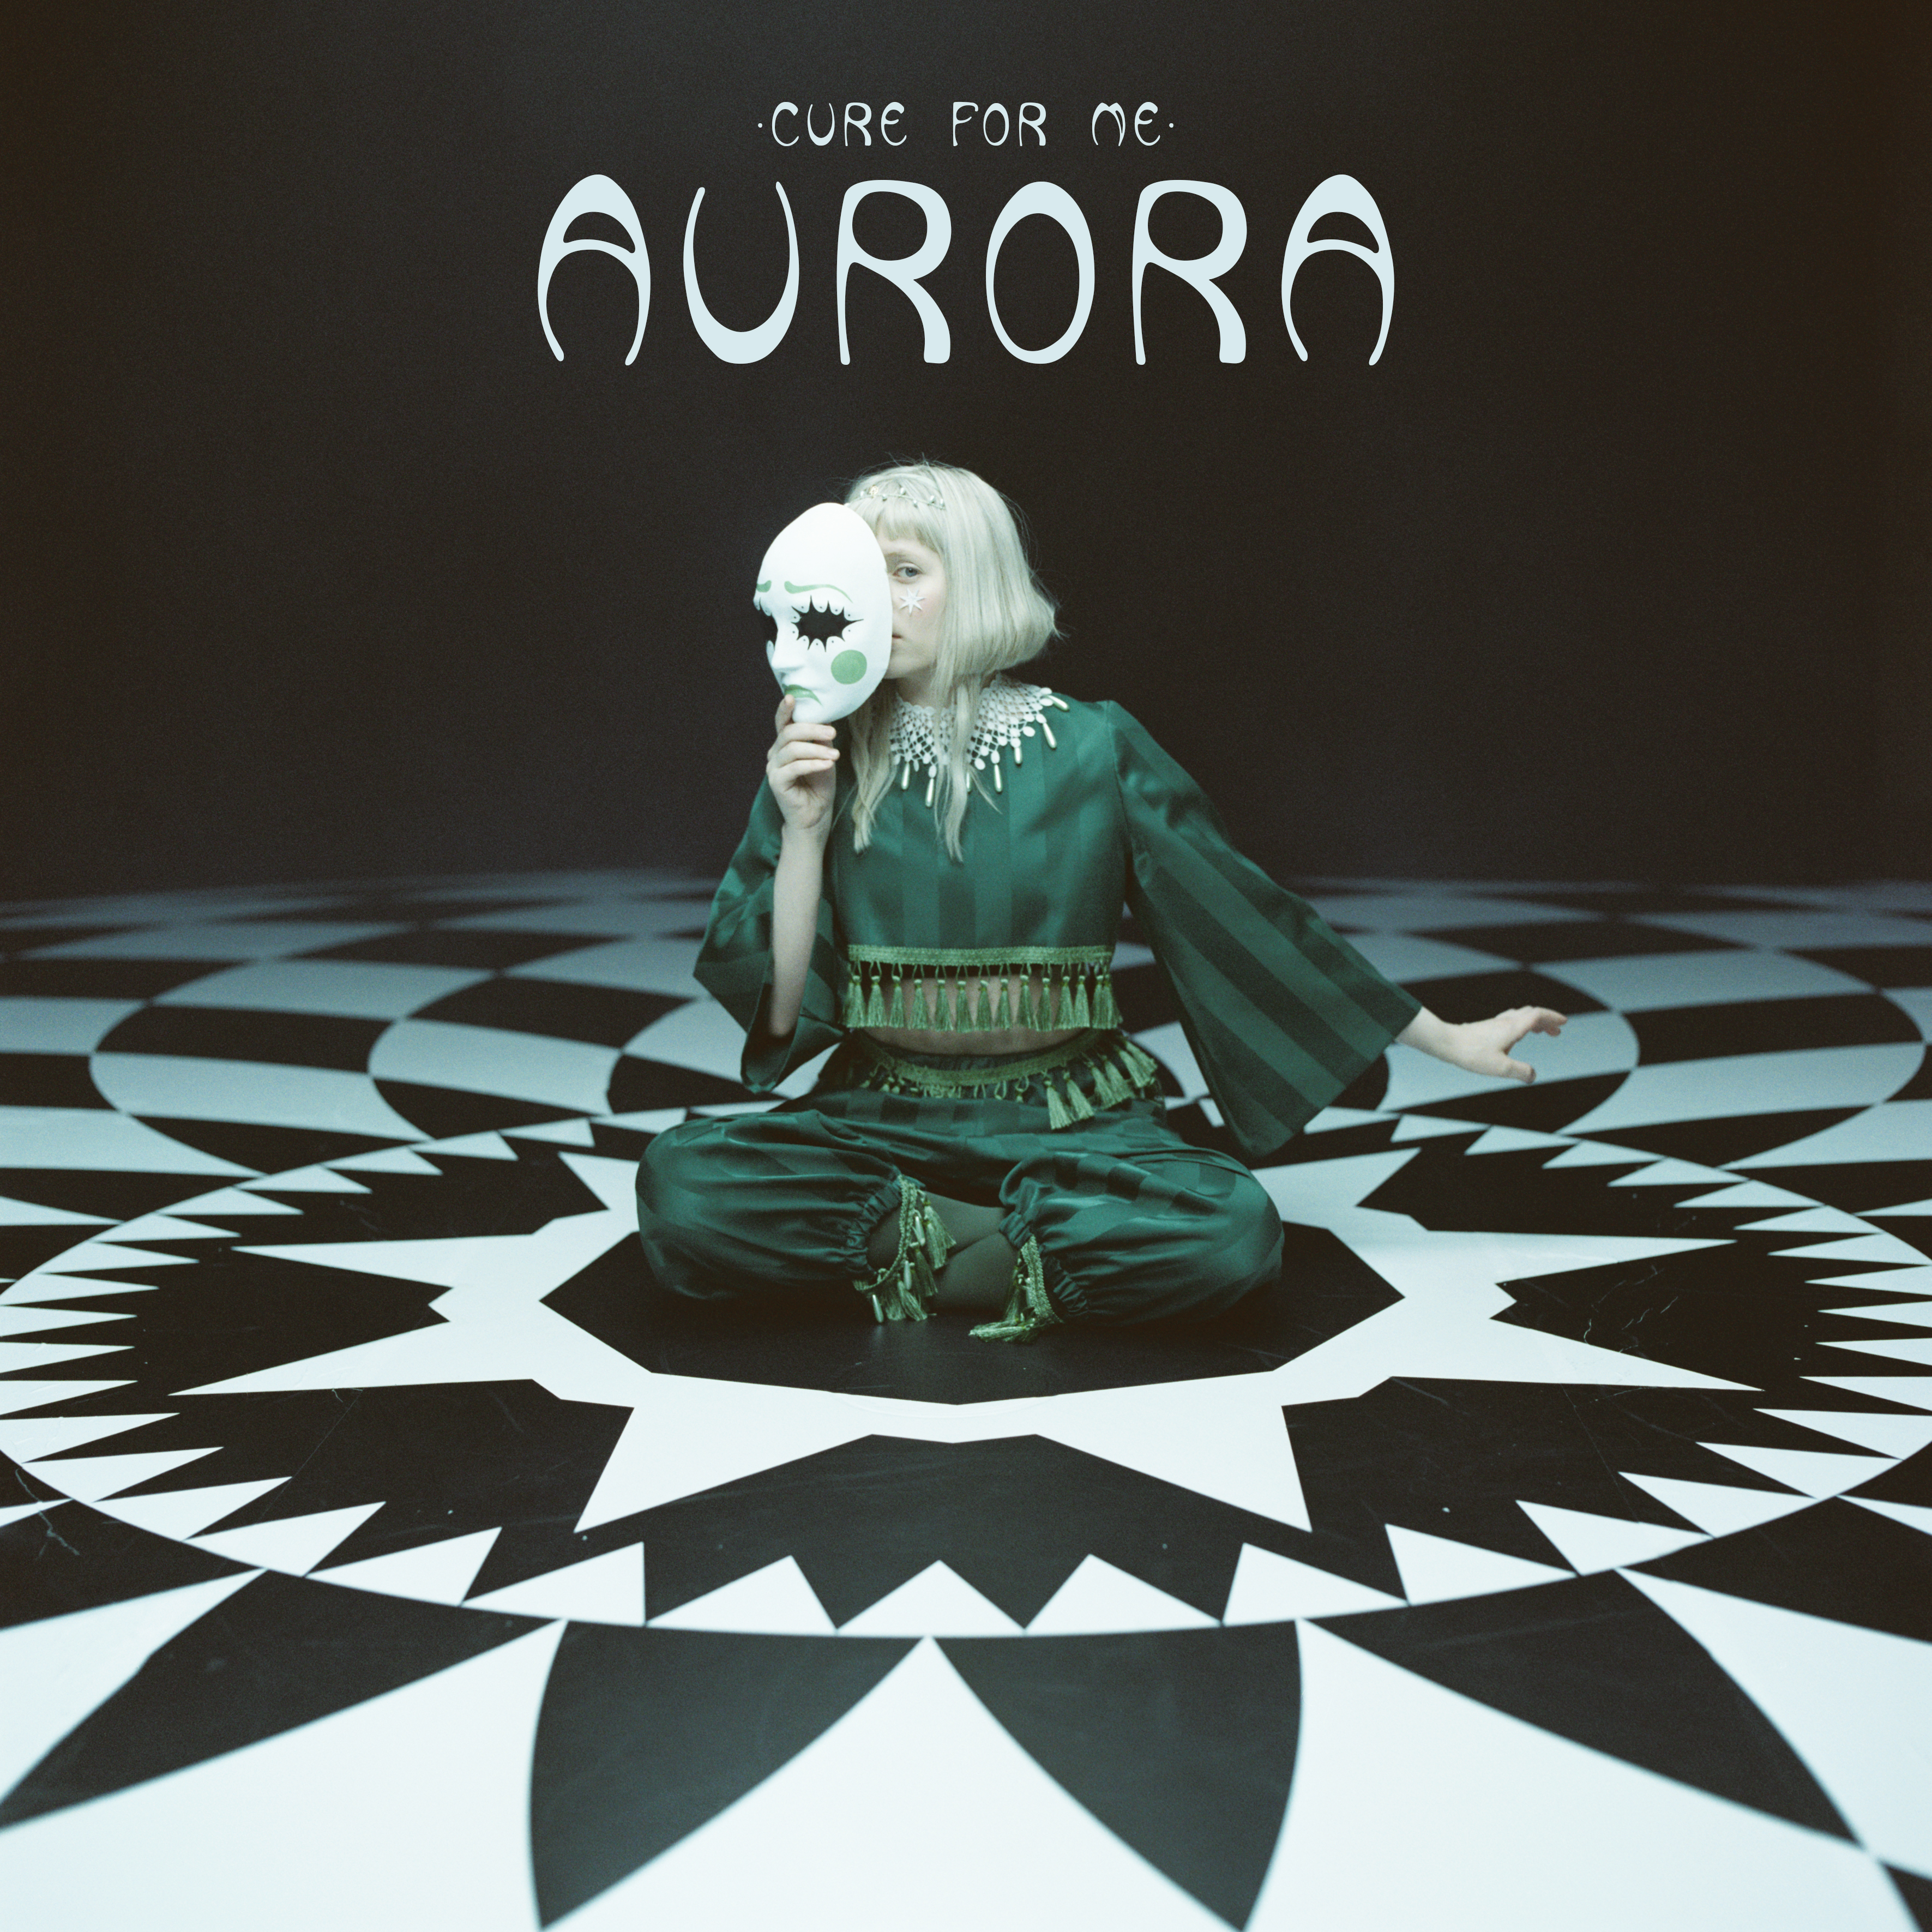 Aurora Daily — Aurora - cure for me